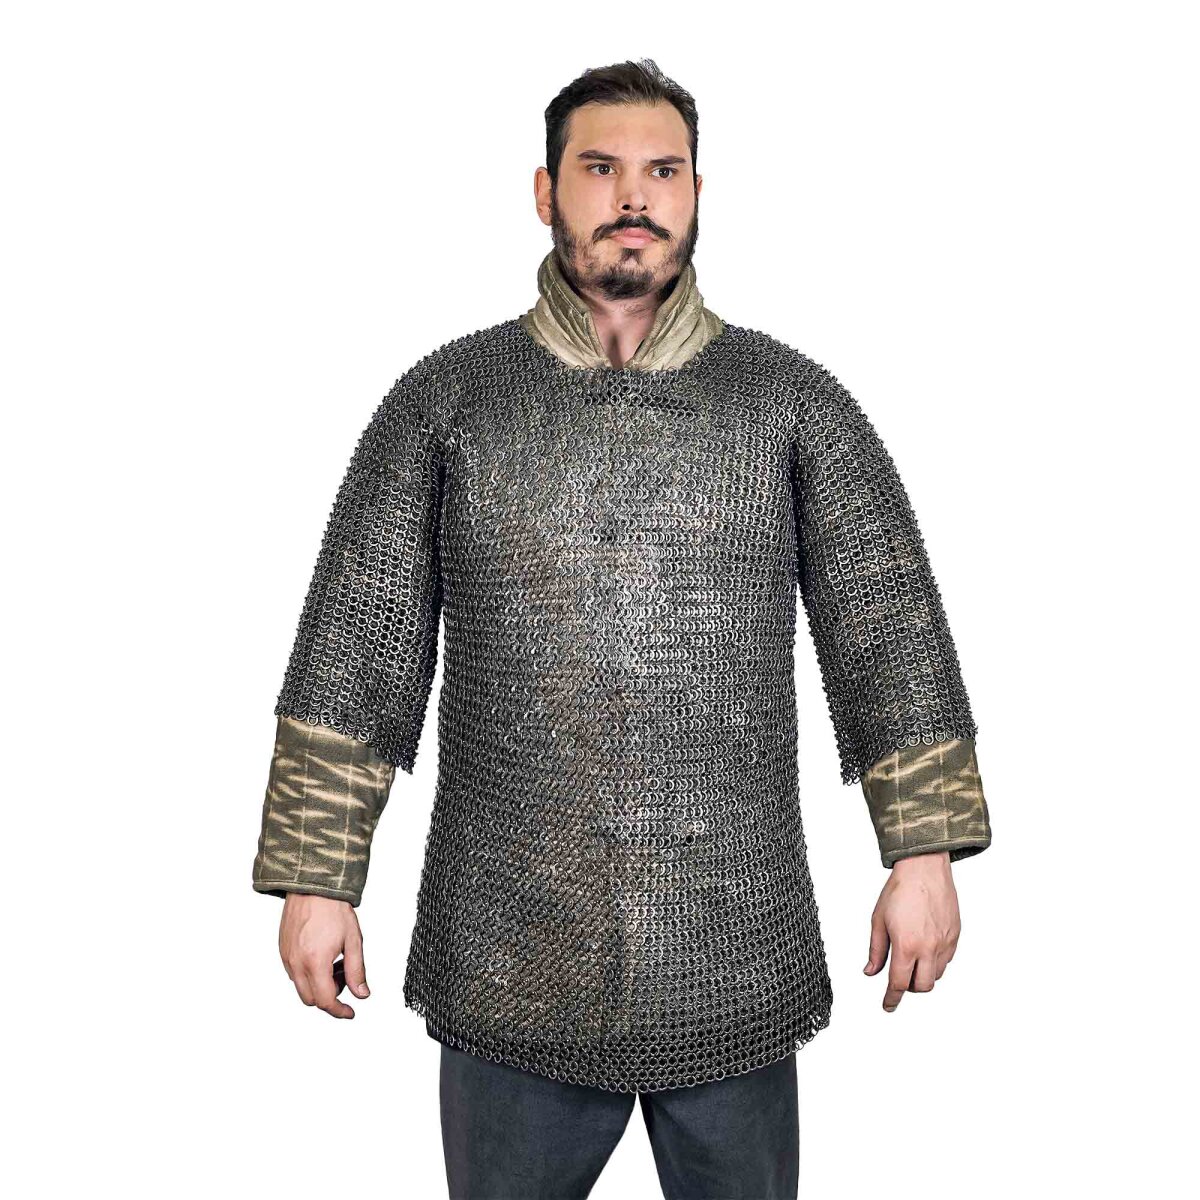 Flat Ring Chainmail Medieval Half Sleeves Shirt...